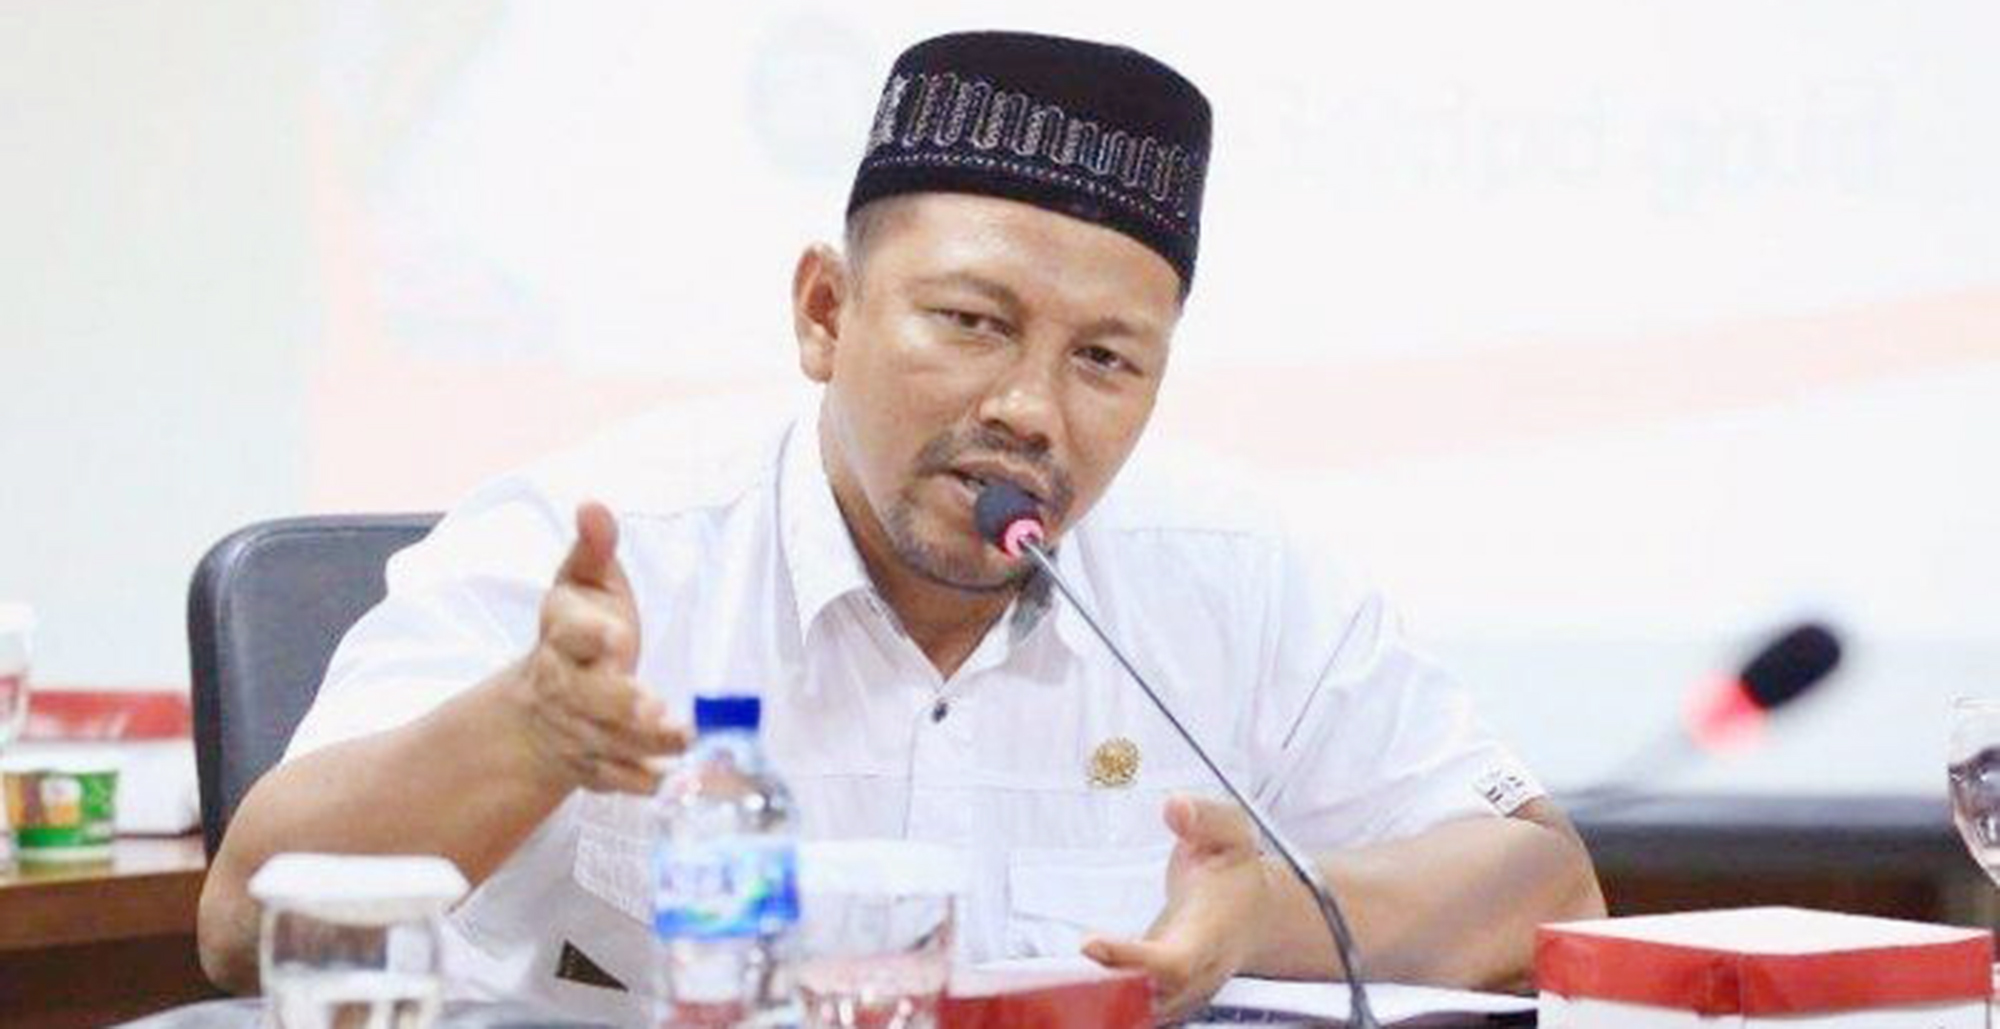 Senator Syech Fadhil mendorong generasi muda Aceh untuk tetap bangga dan bertindak sebagai pewaris semangat perjuangan nenek moyang mereka.